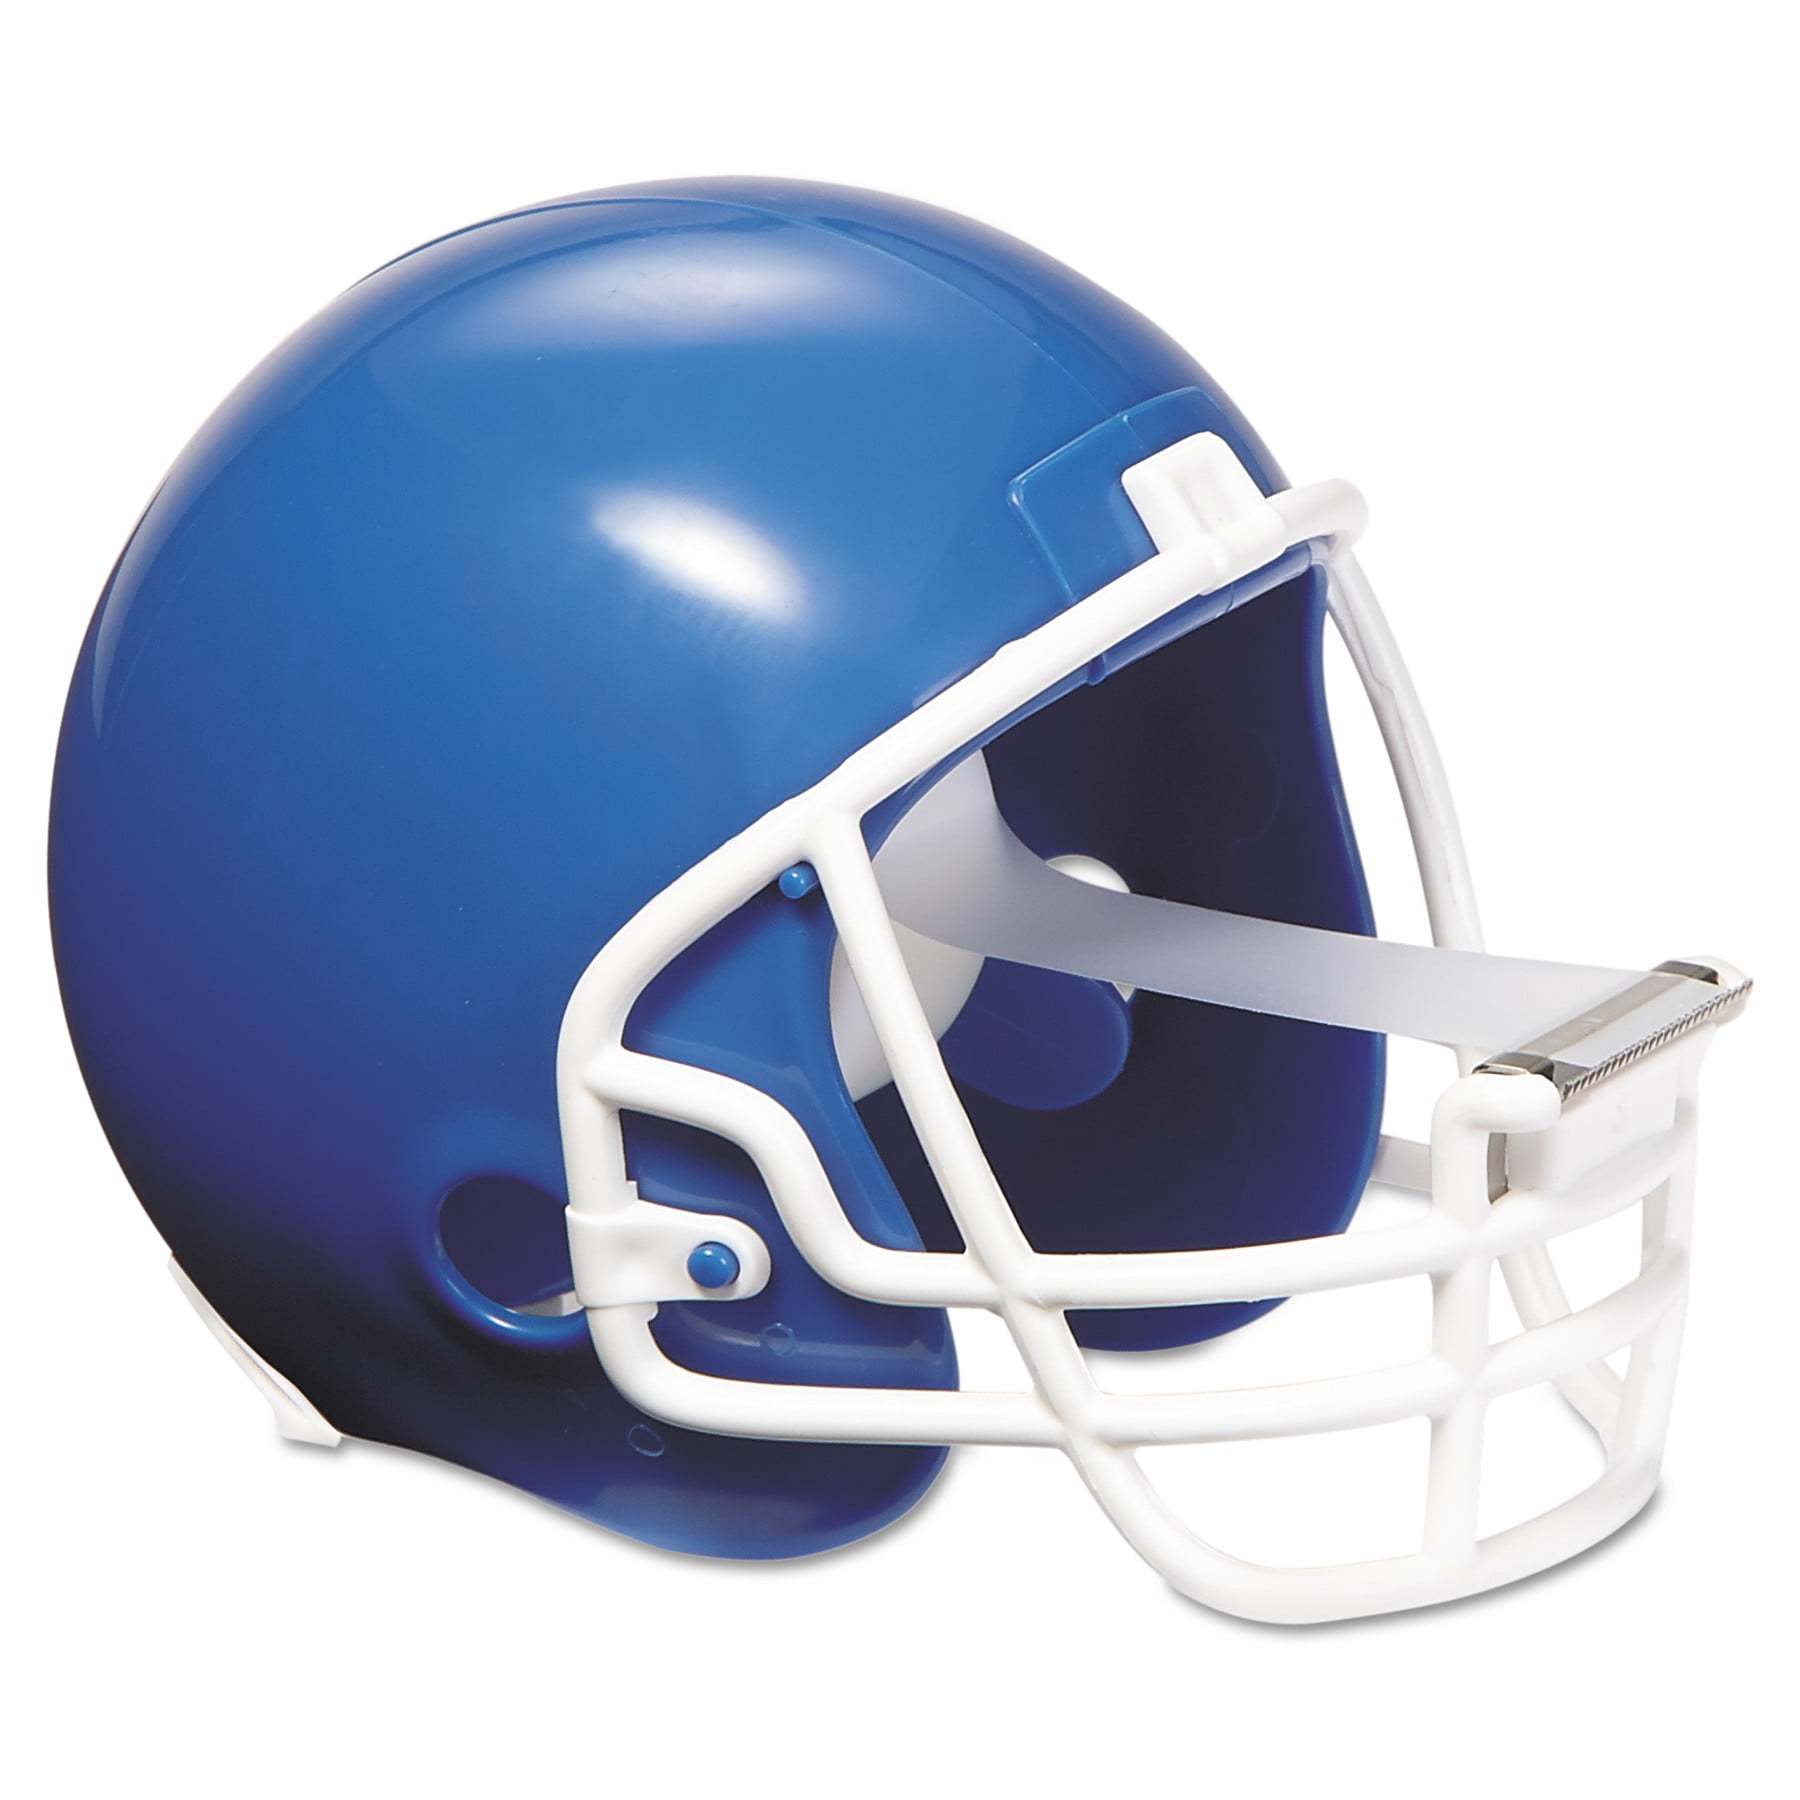 LA Chargers Football Helmet 3M Scotch Tape Dispenser 